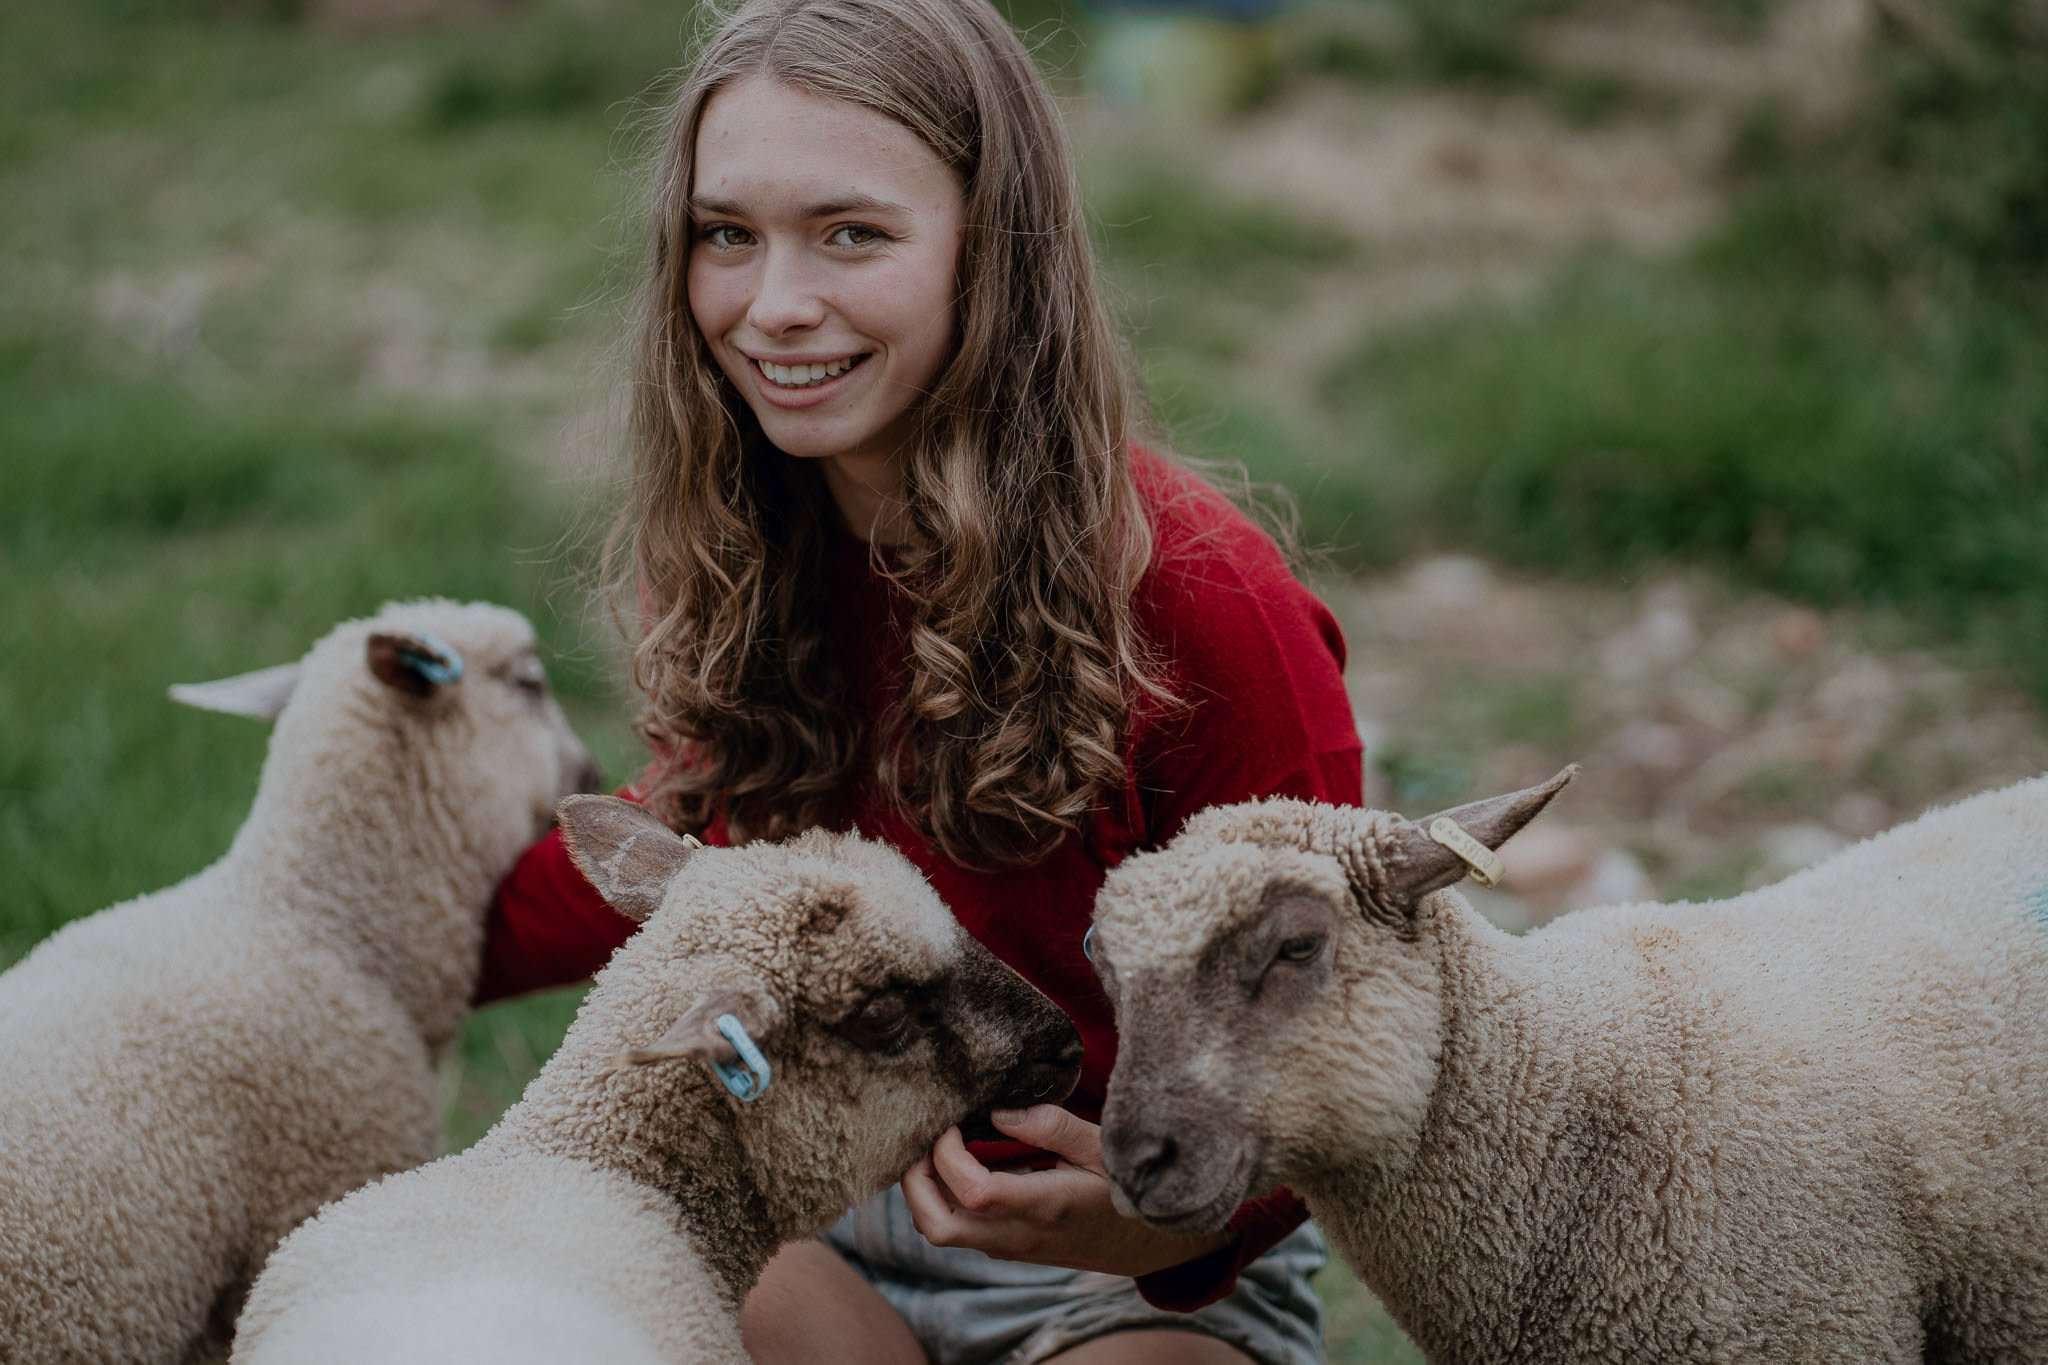 Cuddling lambs at Rock Farm Wedding Venue